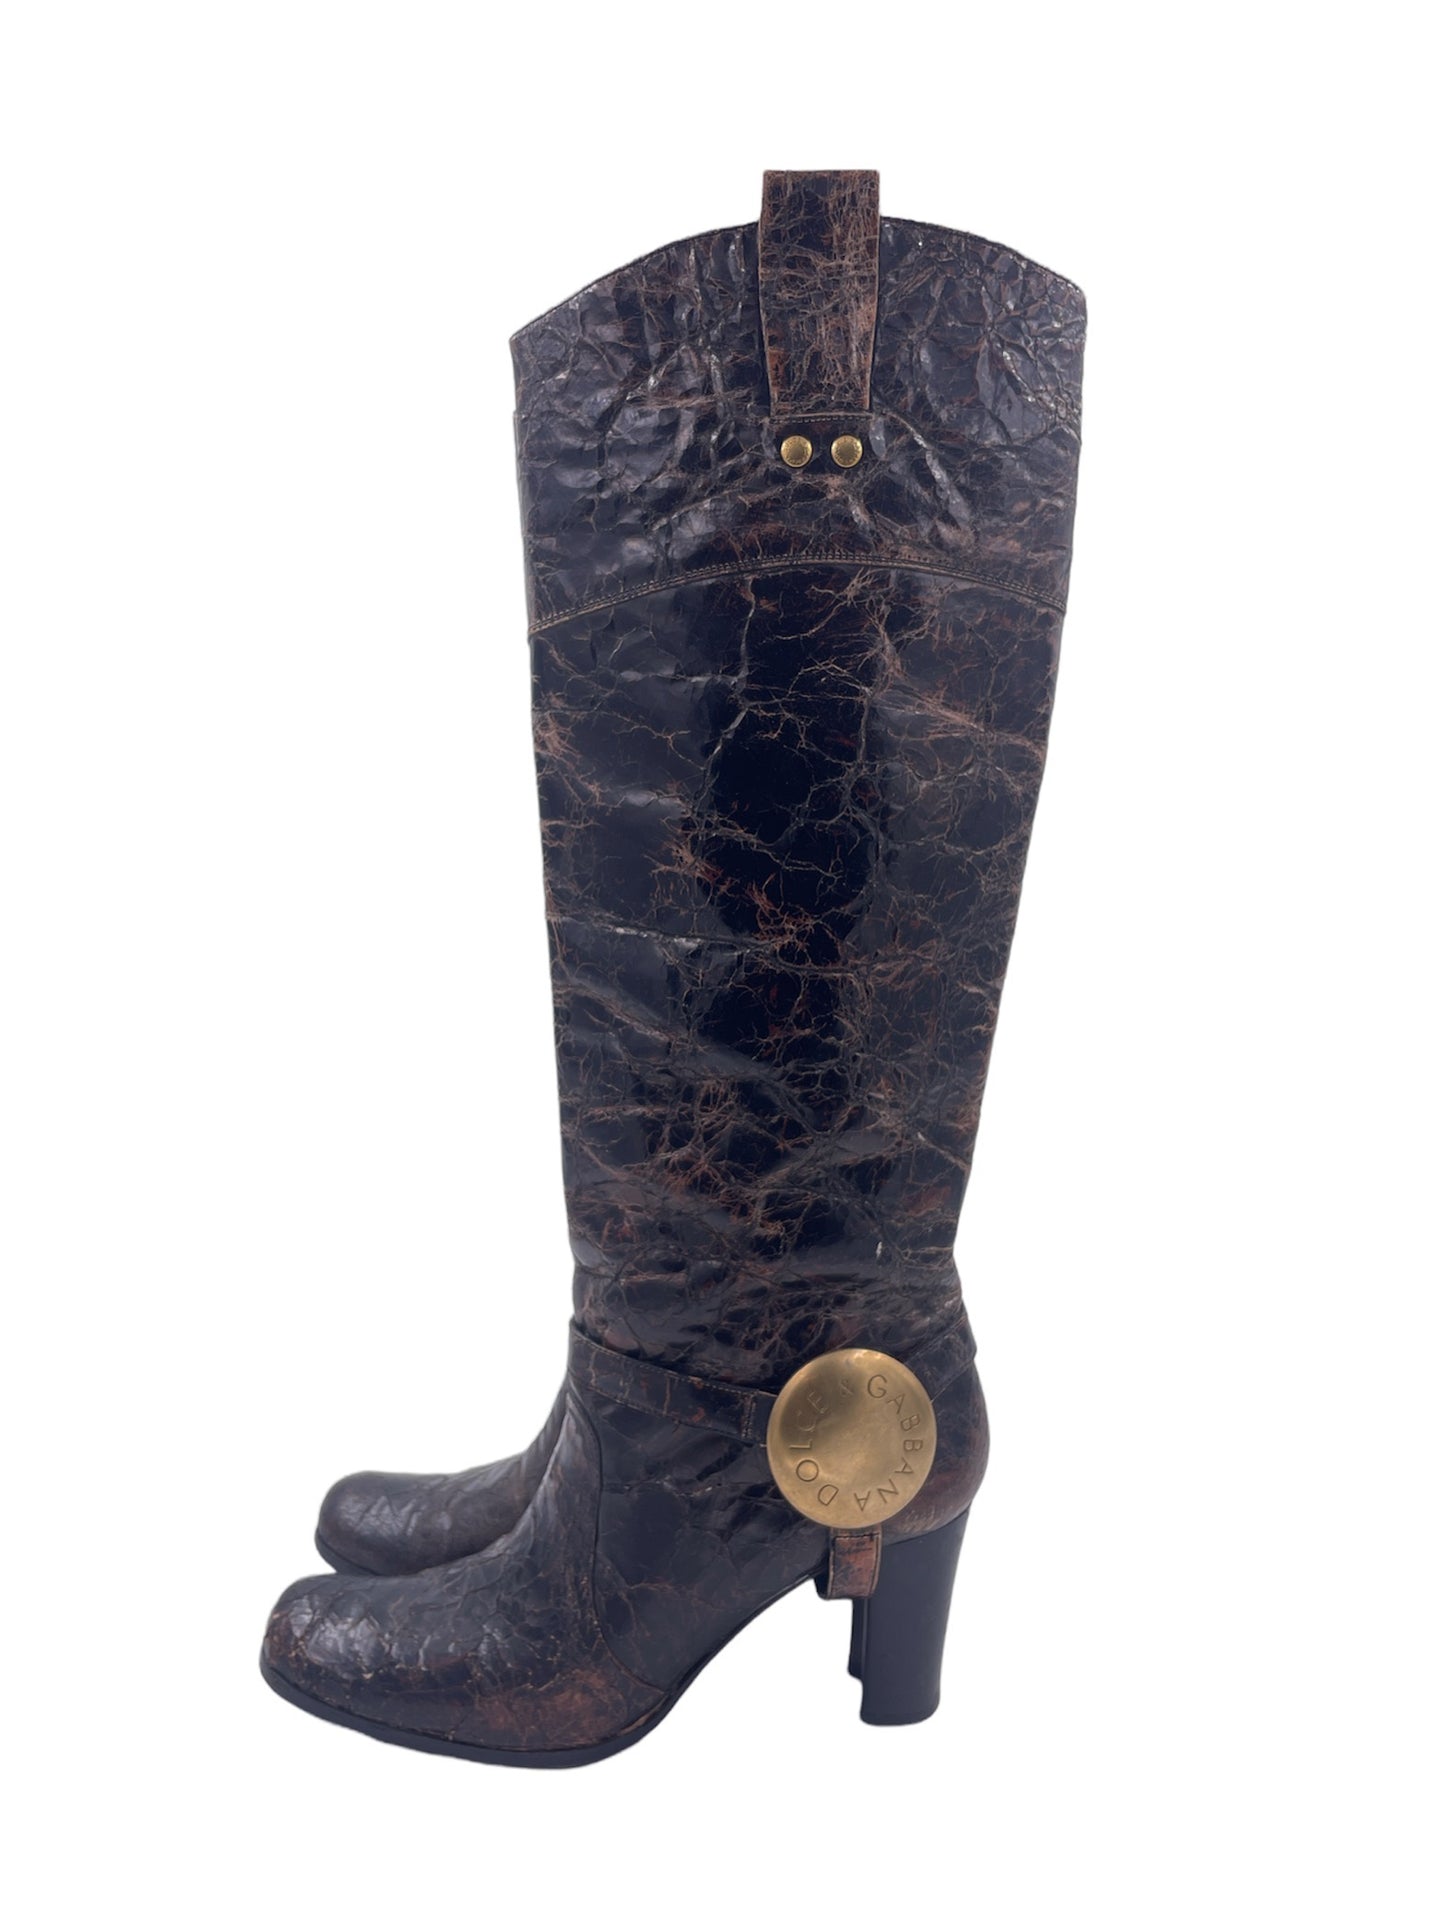 Dolce & Gabanna Wrinkled Leather Boot